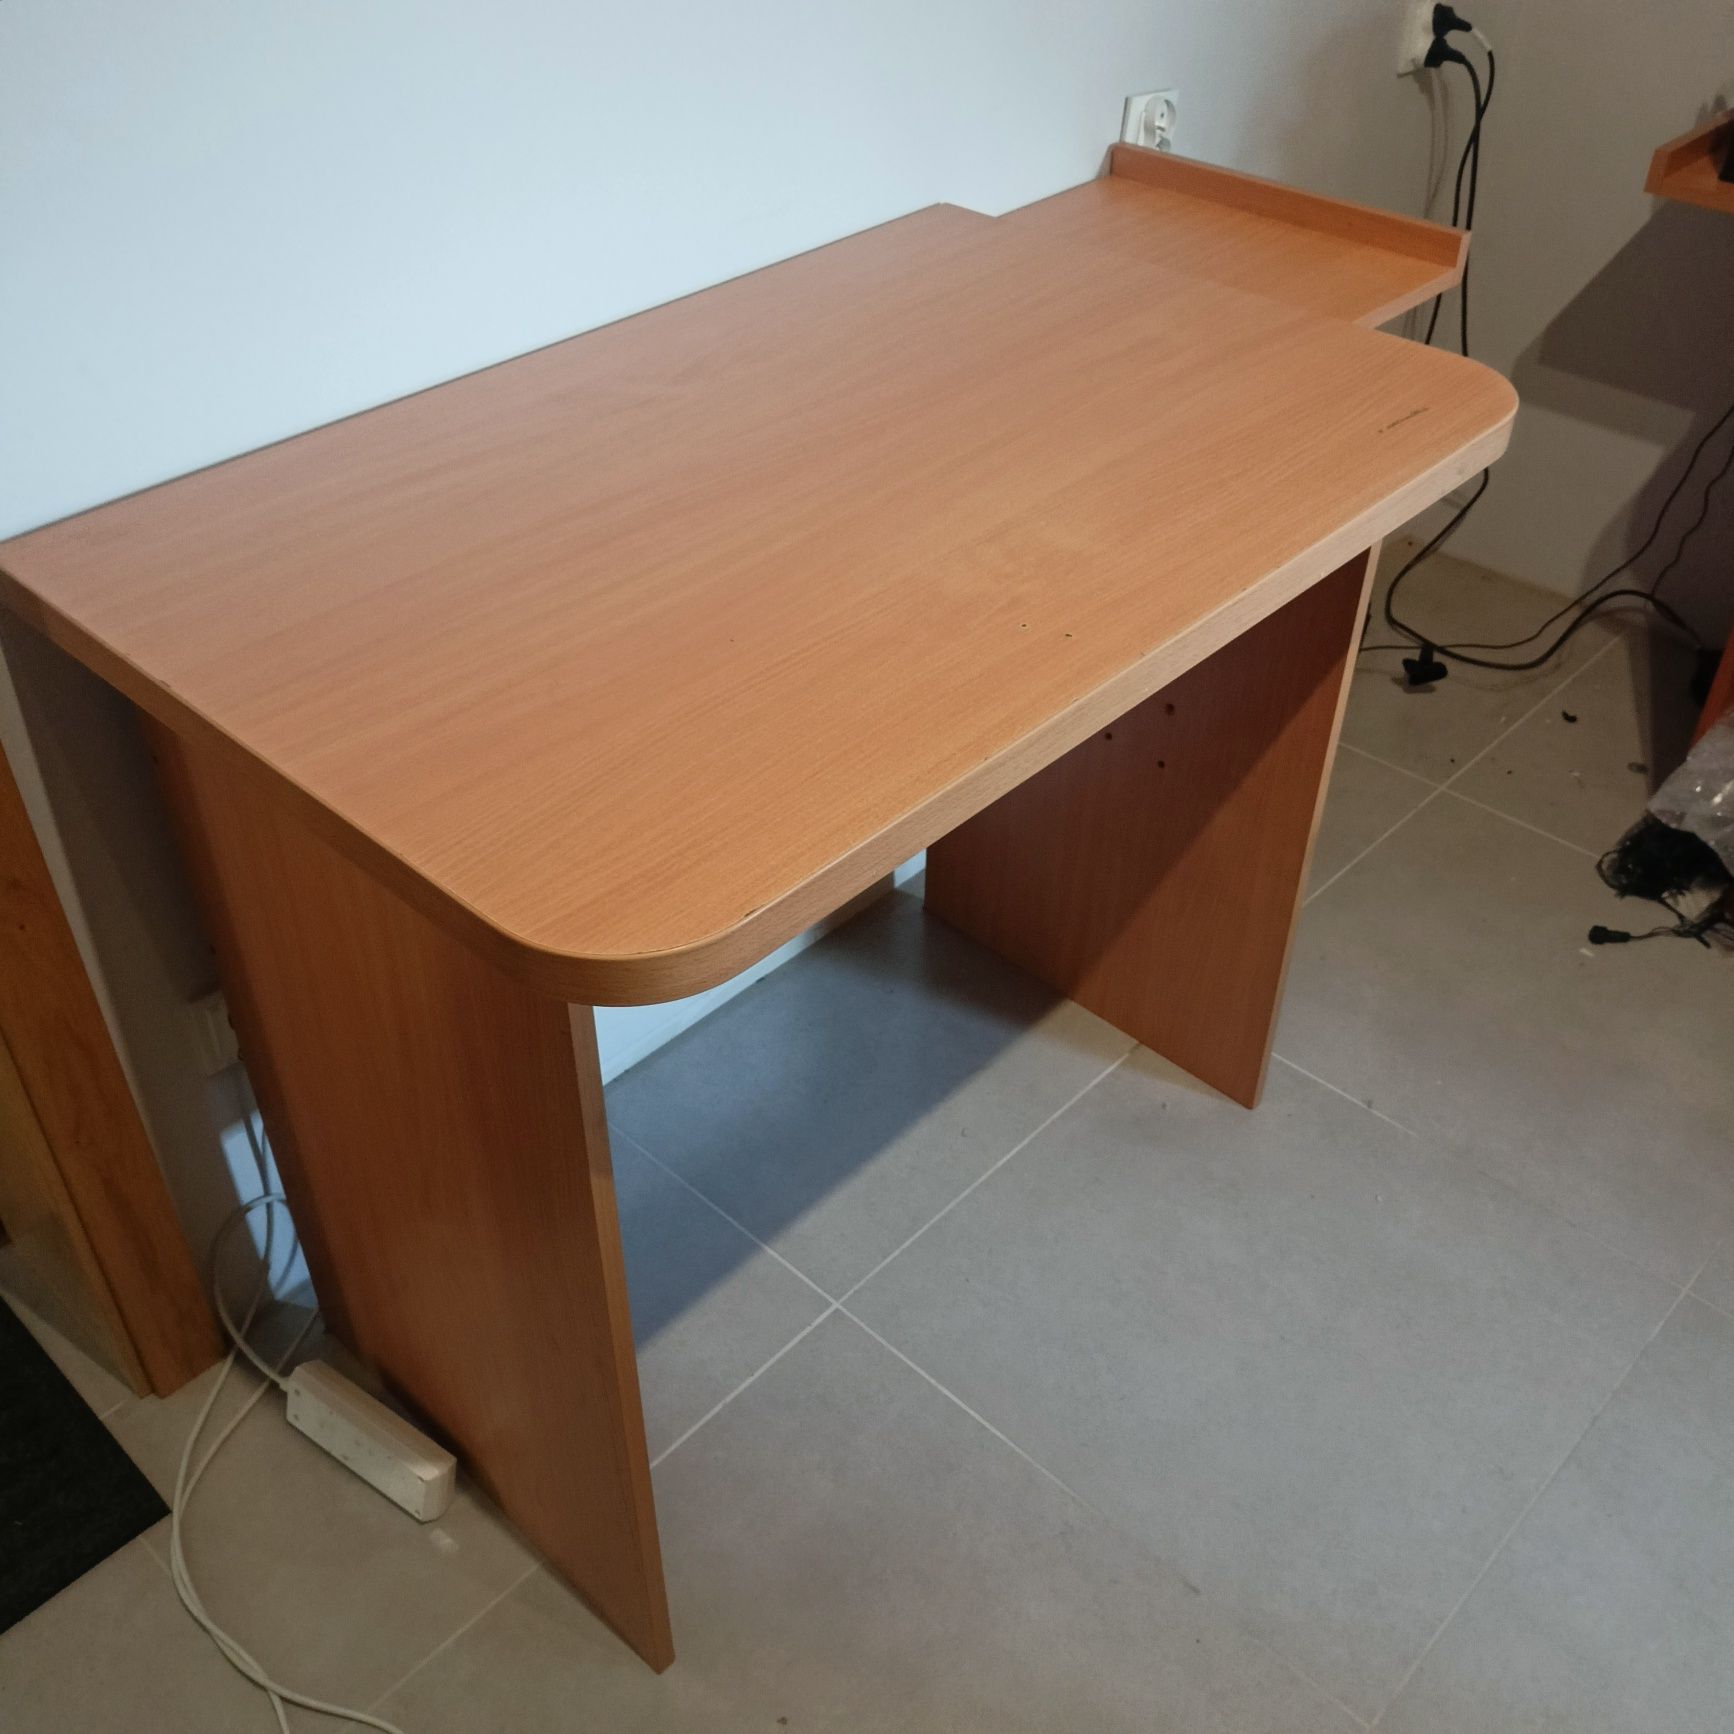 Biurko biurka zrobione samemu, nie marketowe